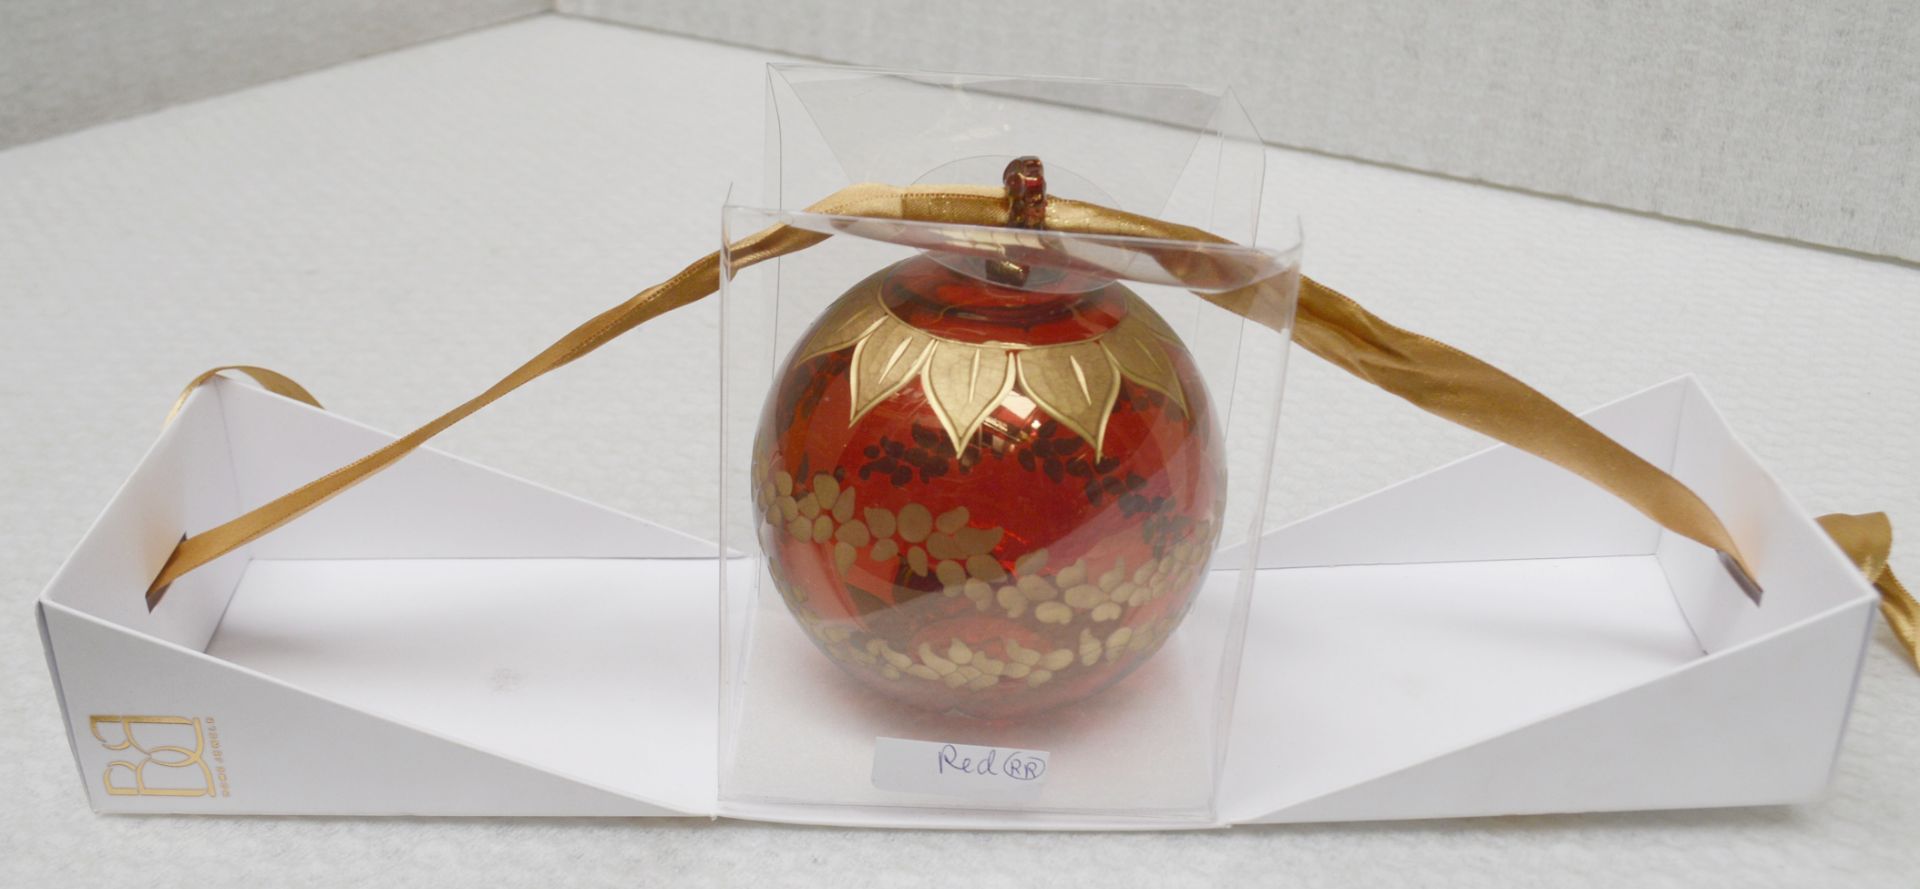 1 x BALDI 'Home Jewels' Italian Hand-crafted Artisan Christmas Tree Decoration - RRP £114.00 - Image 4 of 5